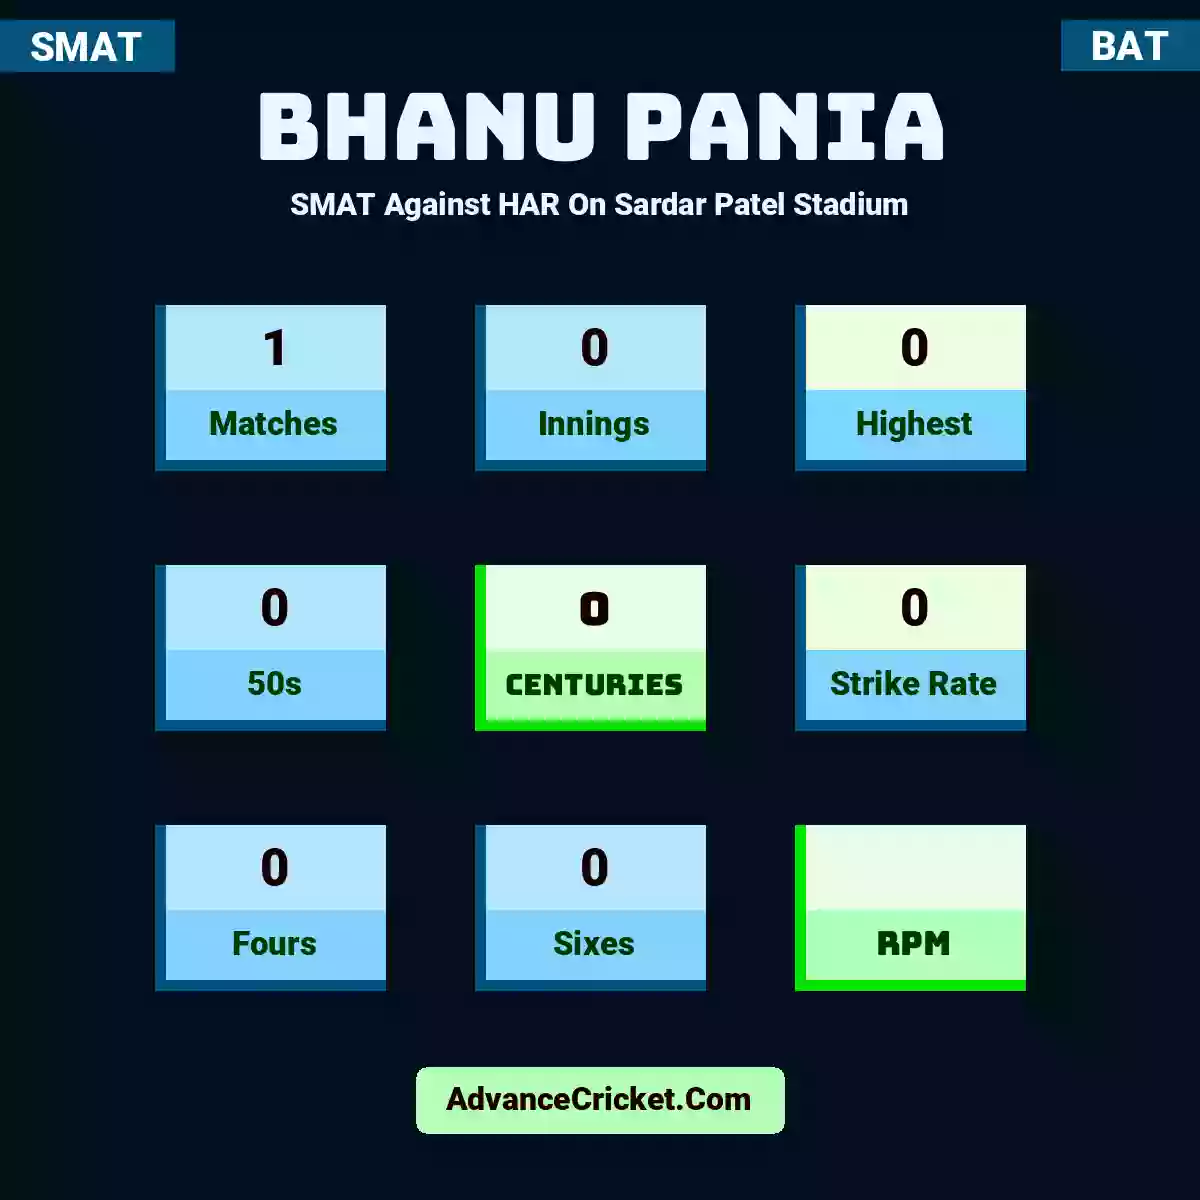 Bhanu Pania SMAT  Against HAR On Sardar Patel Stadium, Bhanu Pania played 1 matches, scored 0 runs as highest, 0 half-centuries, and 0 centuries, with a strike rate of 0. B.Pania hit 0 fours and 0 sixes.